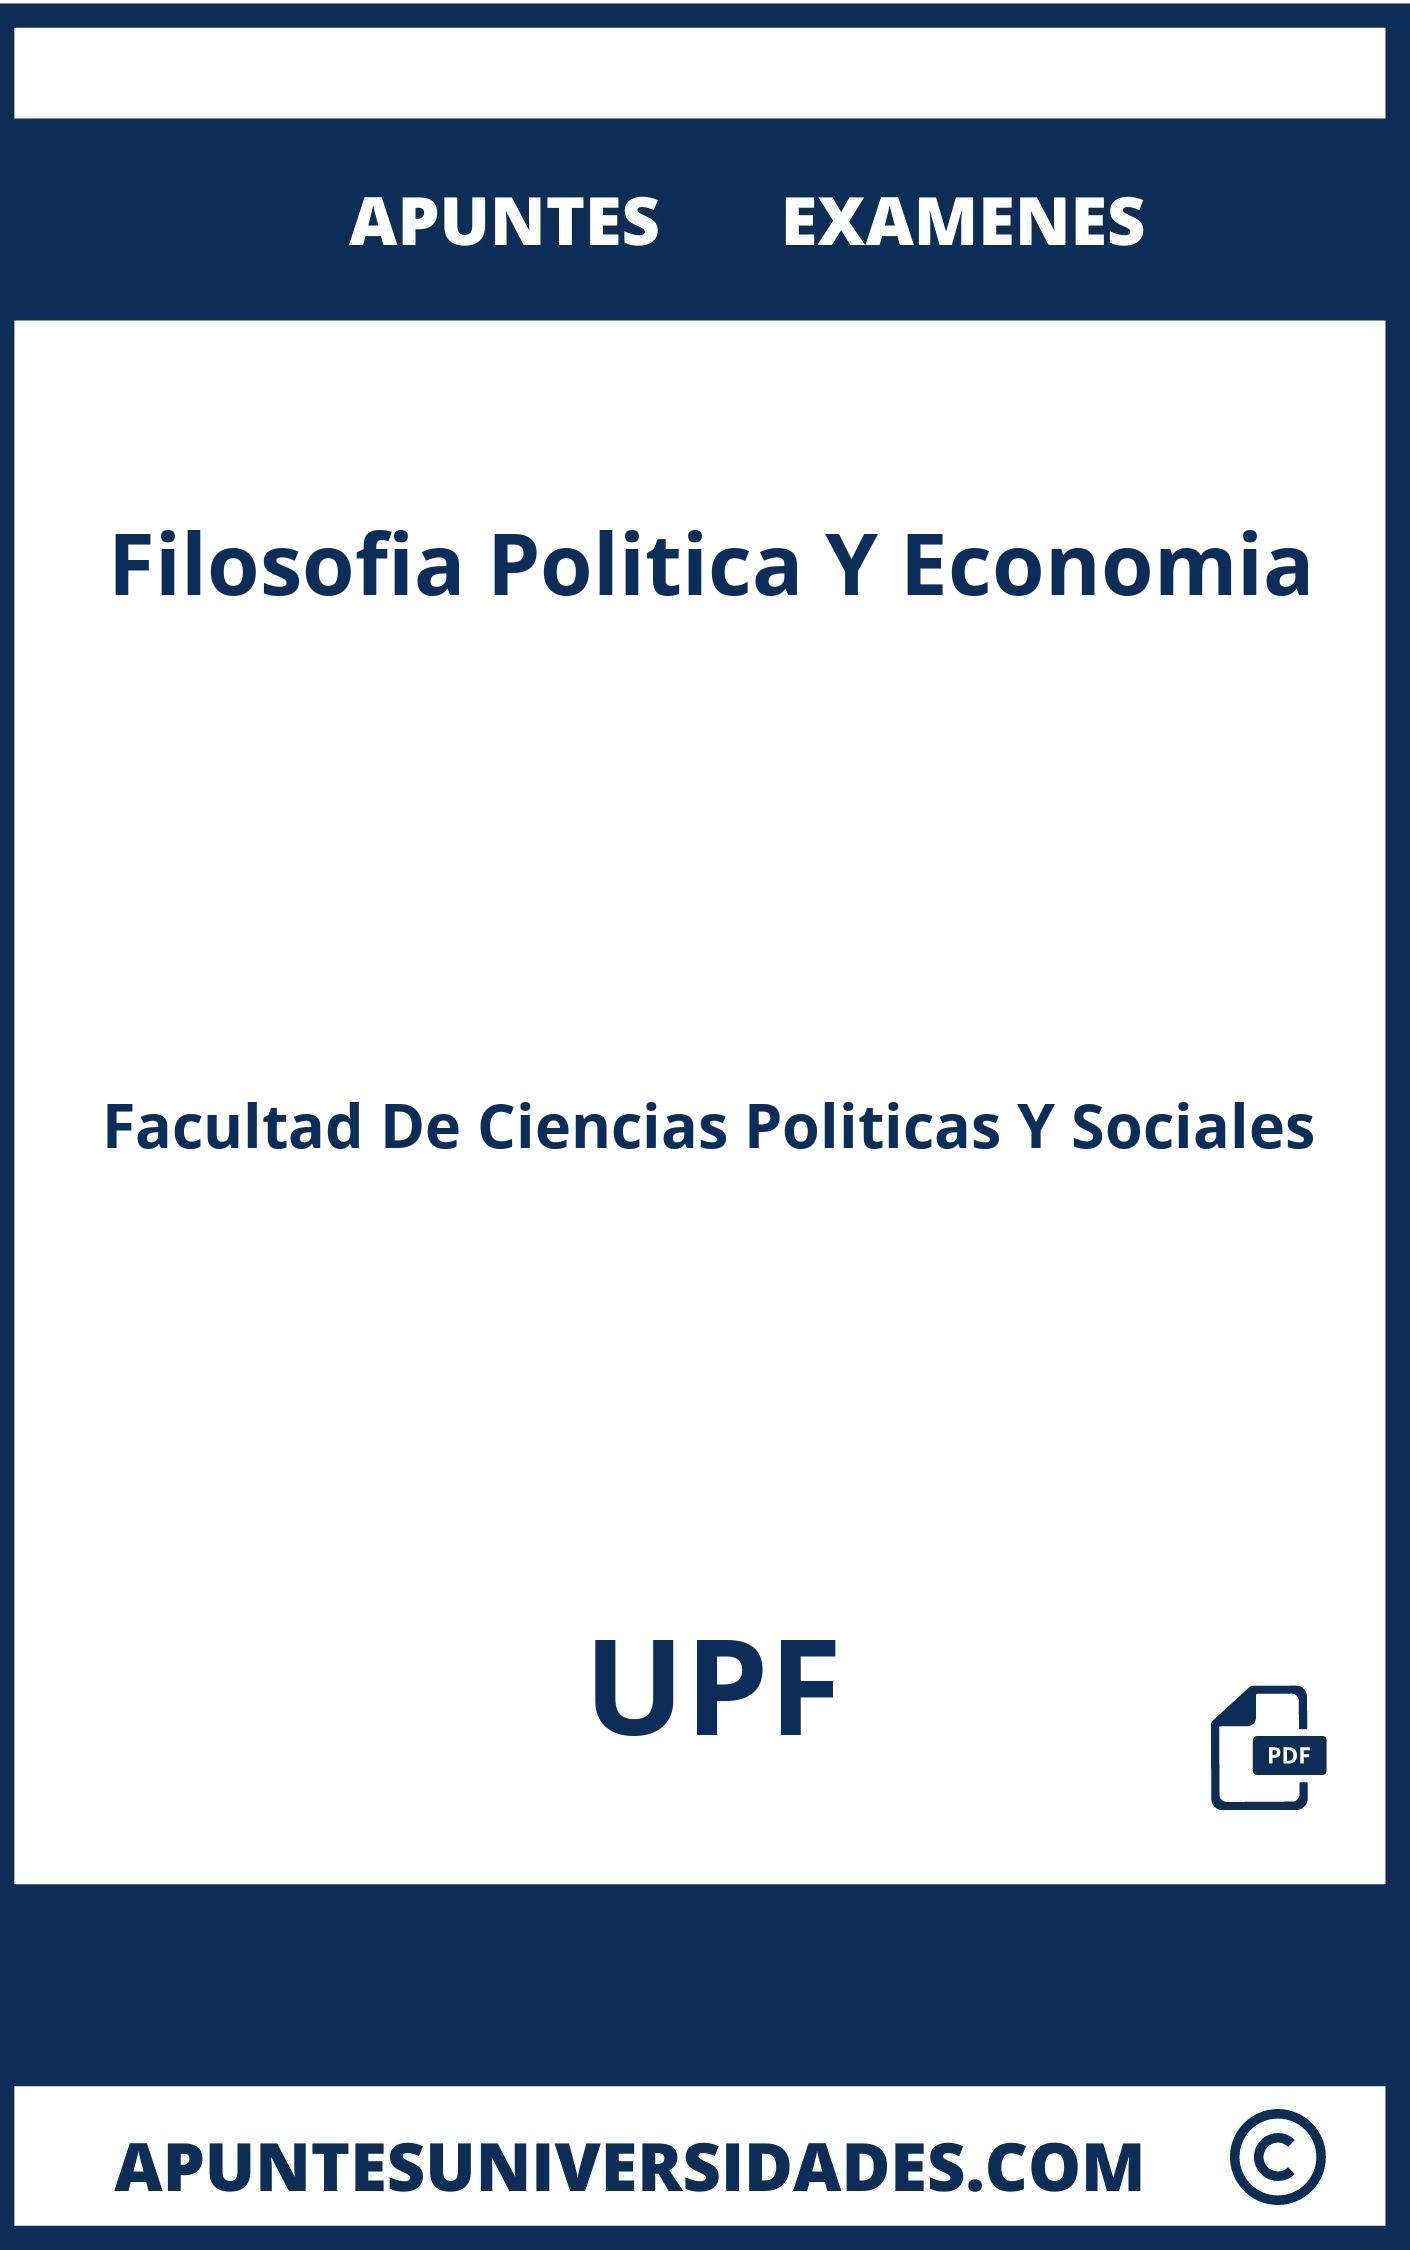 Filosofia Politica Y Economia UPF Apuntes Examenes